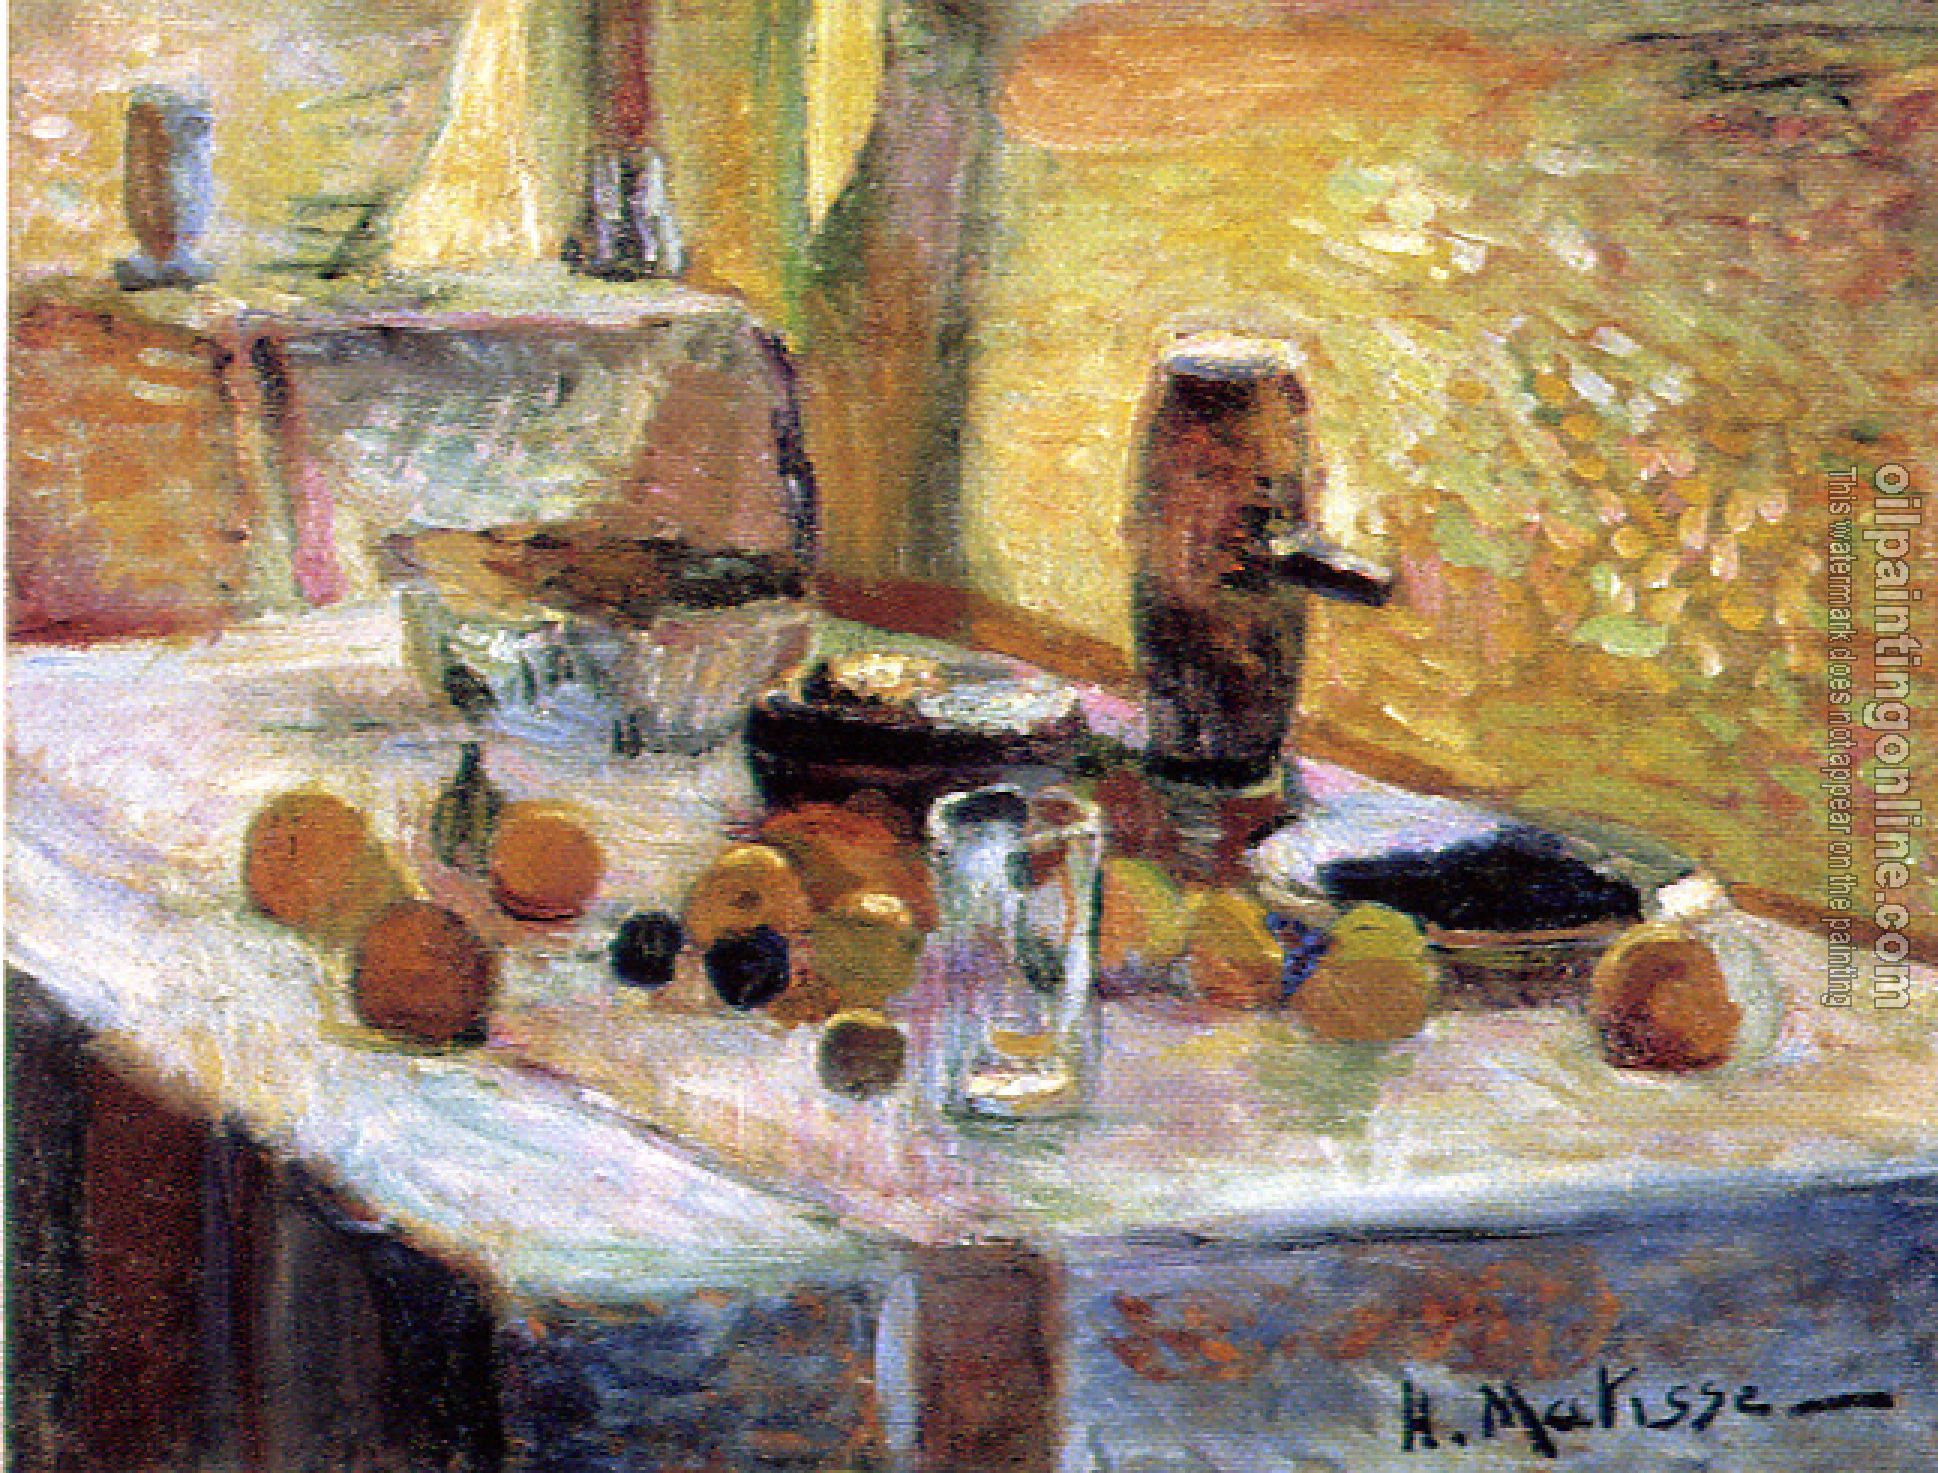 Matisse, Henri Emile Benoit - first orange still life